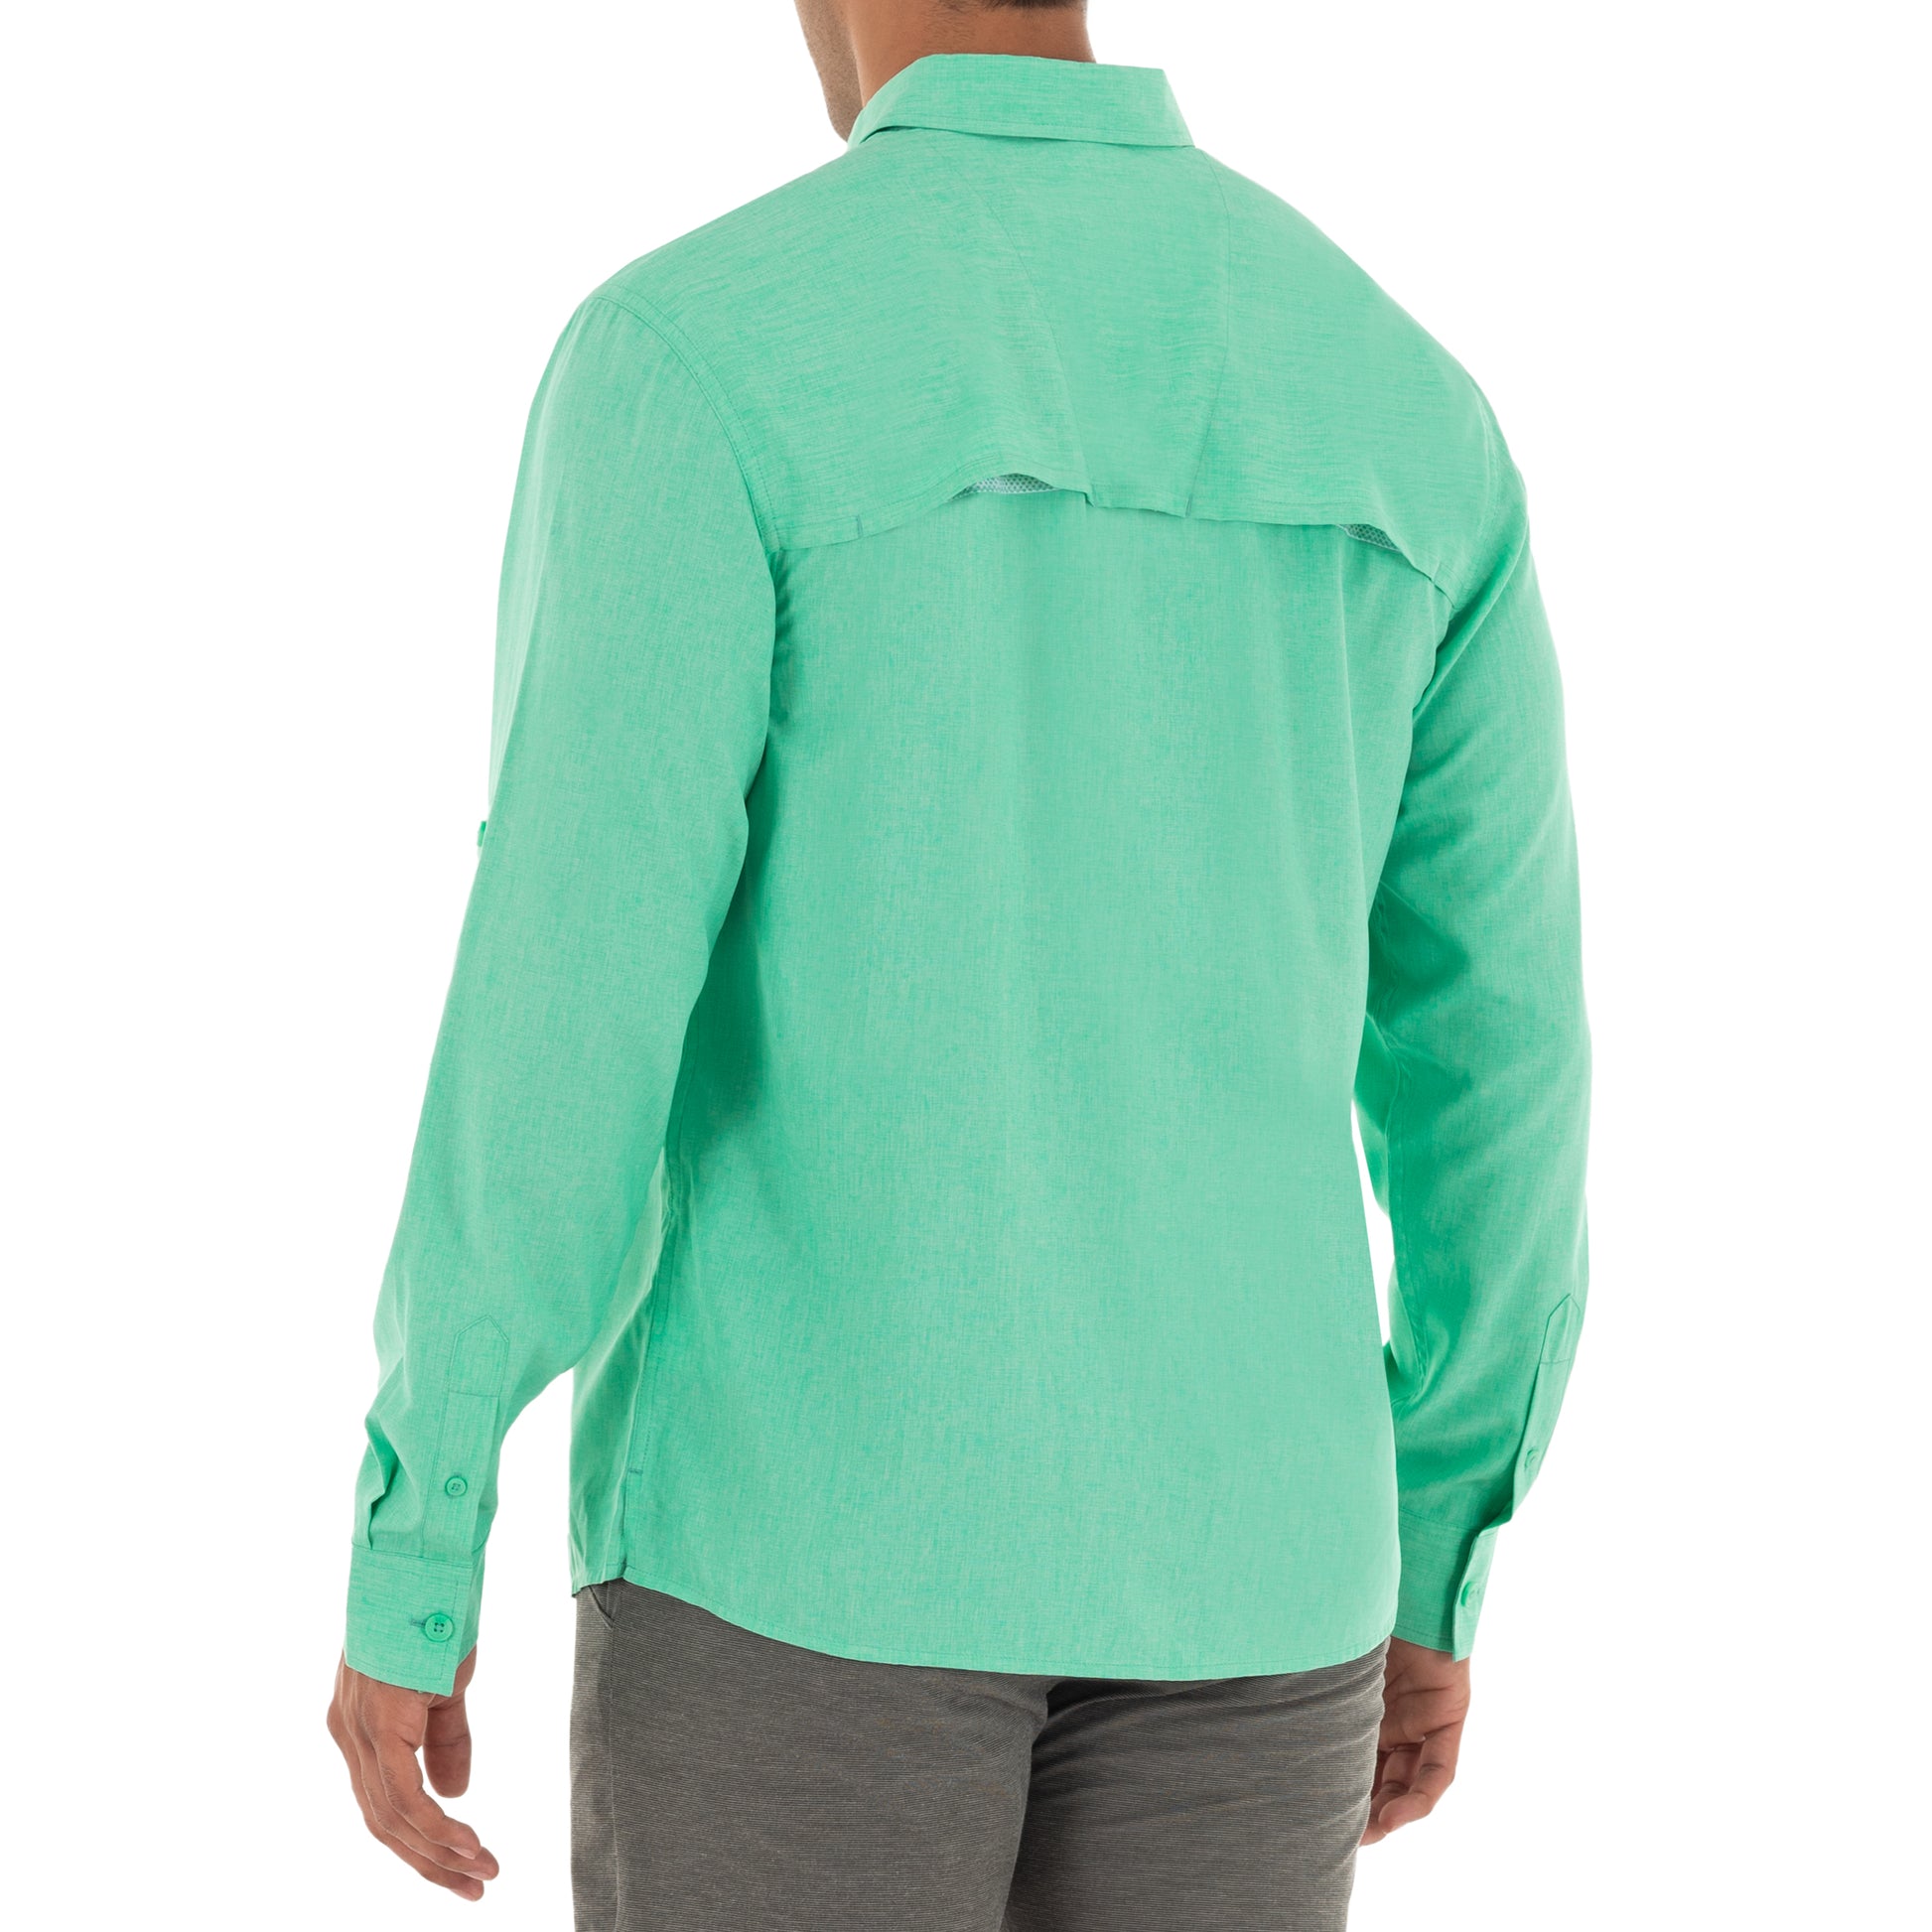 Men's Long Sleeve Heather Textured Cationic Grey Fishing Shirt – Guy Harvey